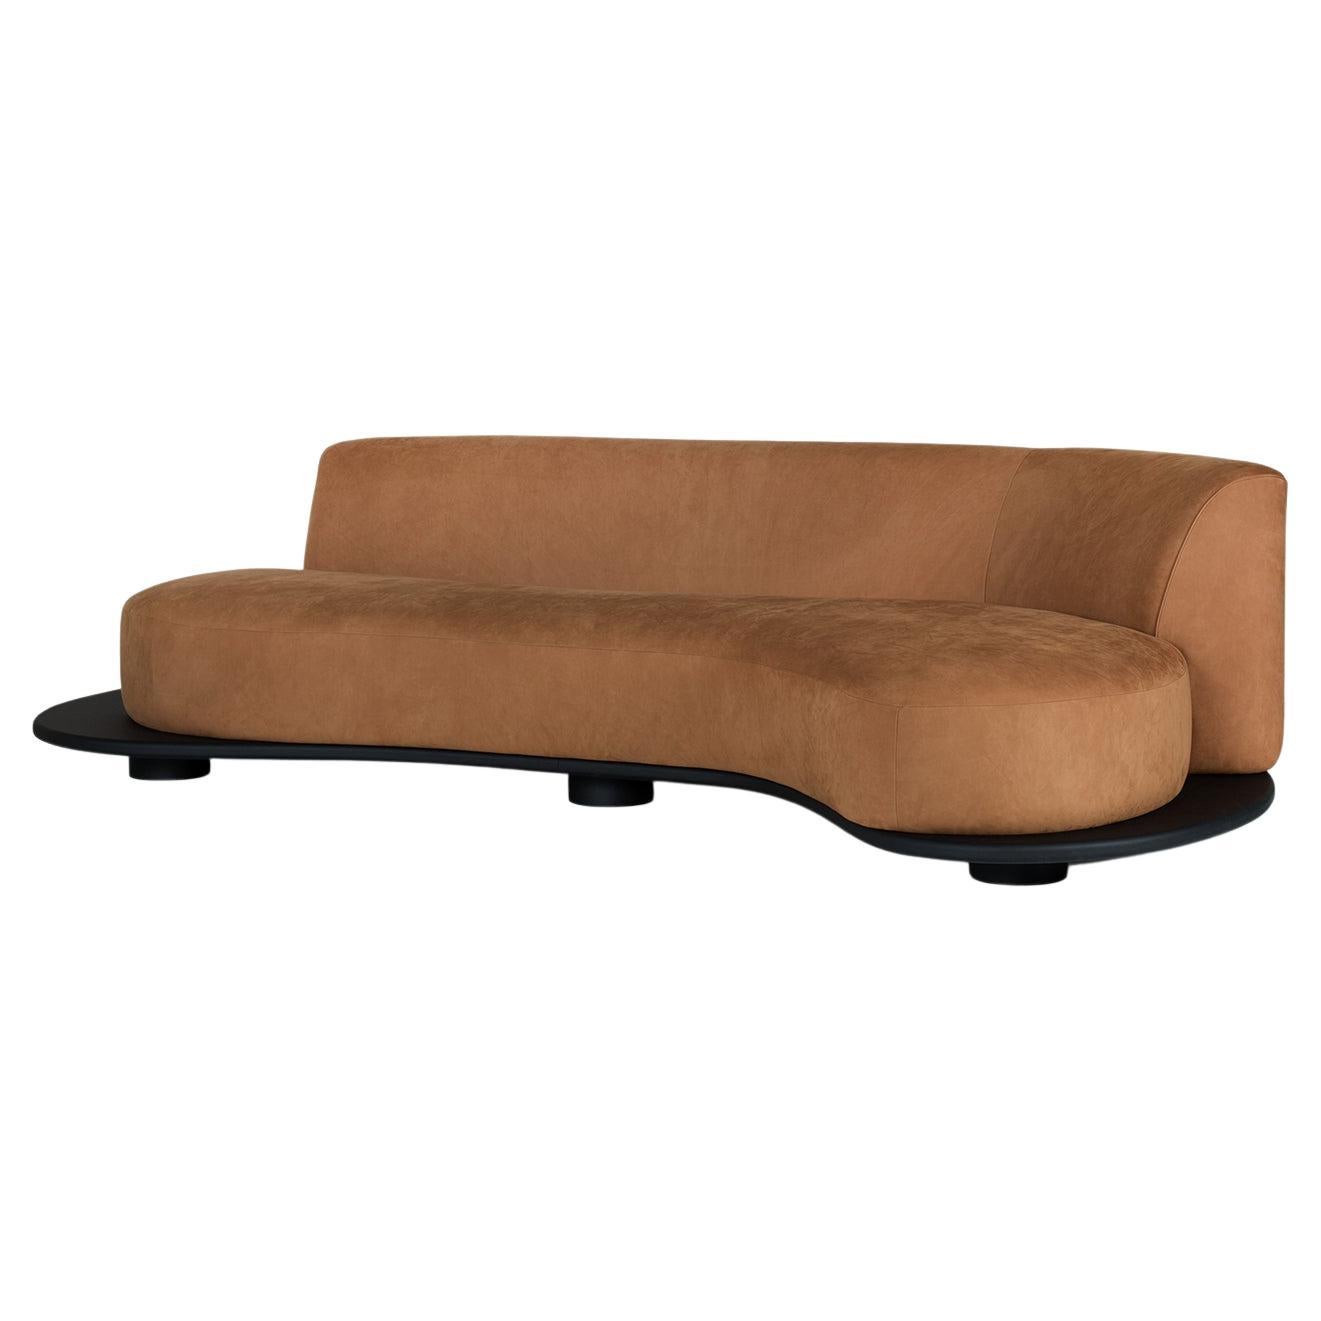 Modernes Galapinhos-Sofa, Samtleder, handgefertigt in Portugal von Greenapple